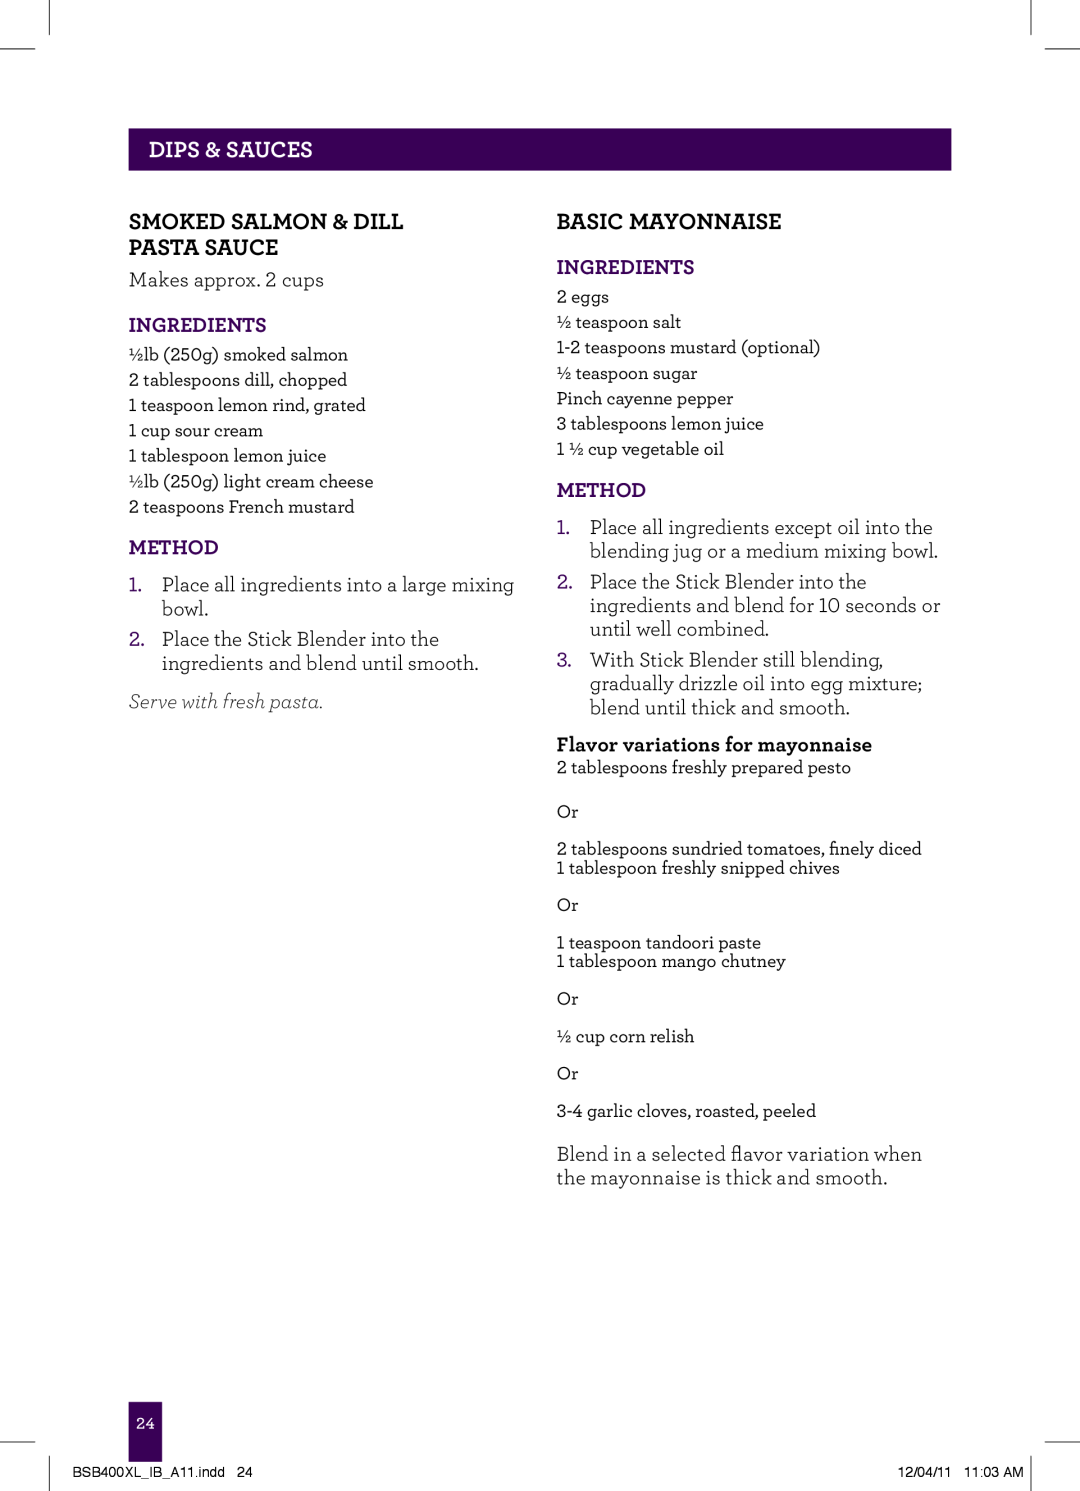 Breville BSB400XL manual Smoked salmon & dill pasta sauce, Basic mayonnaise, Dips & Sauces, Ingredients, Method 